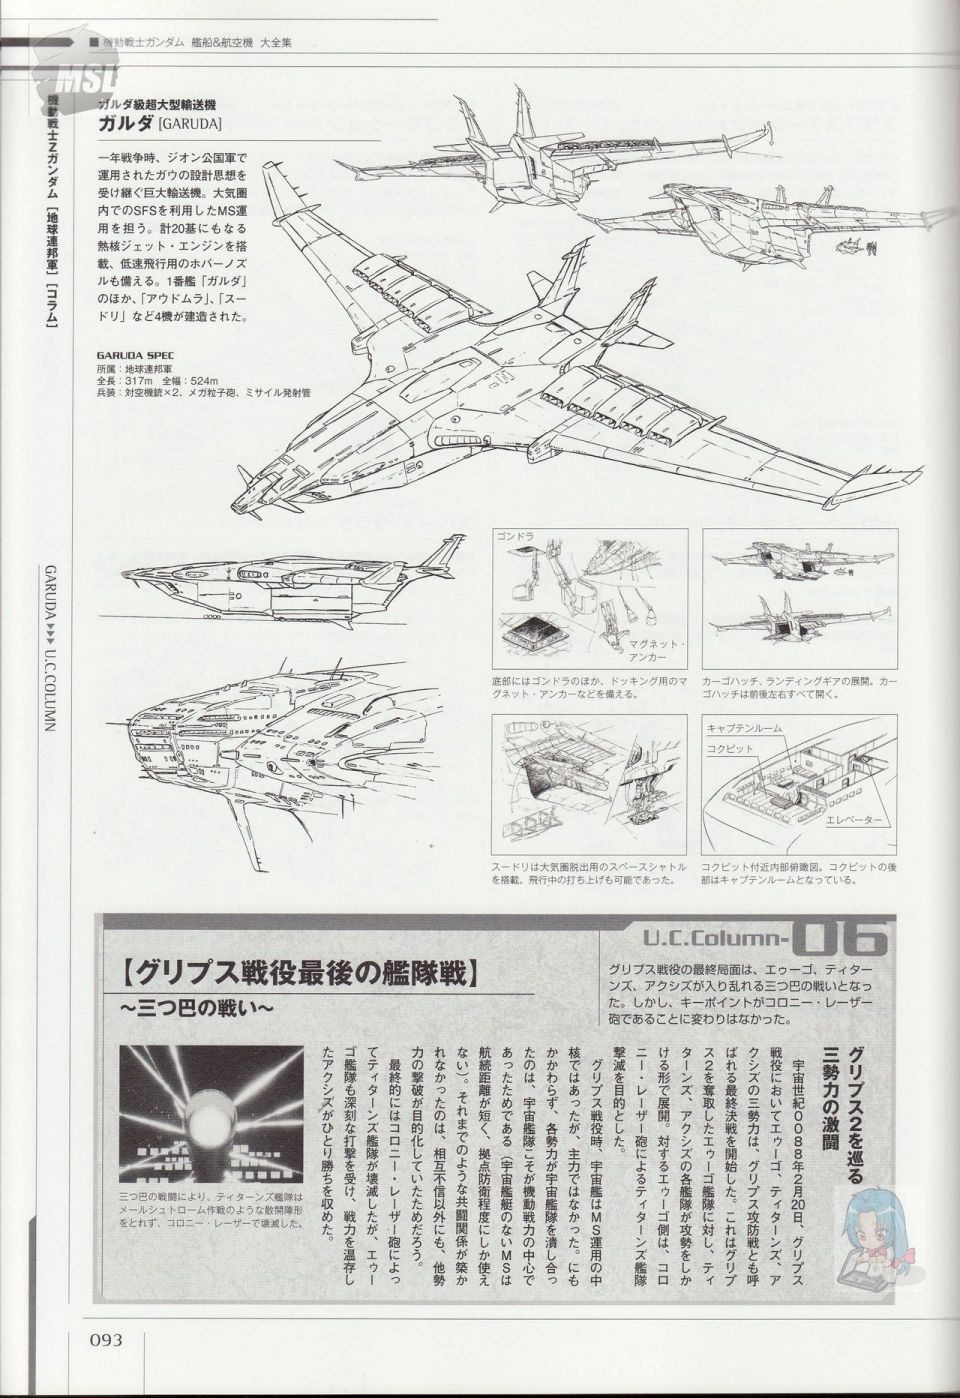 Mobile Suit Gundam - Ship amp; Aerospace Plane Encyclopedia - 第1卷(2/4) - 3